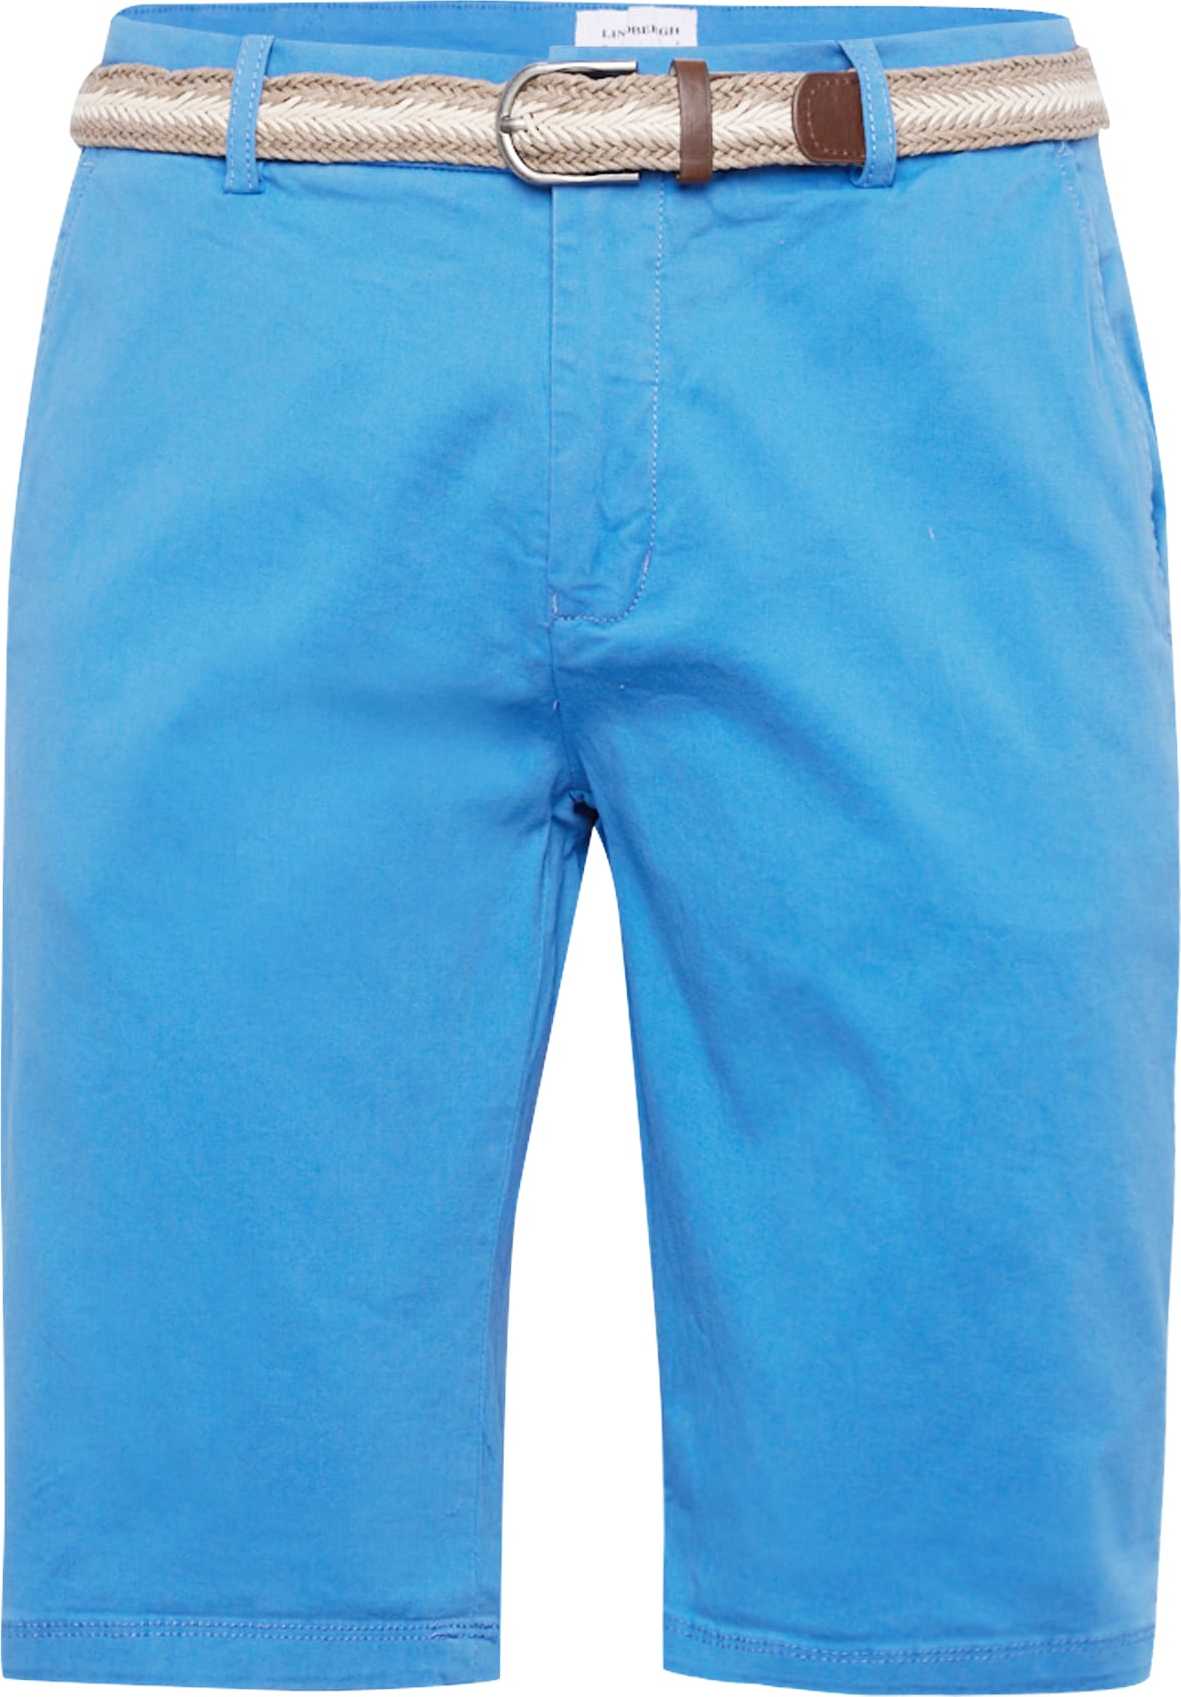 Chino kalhoty 'Superflex' lindbergh azurová